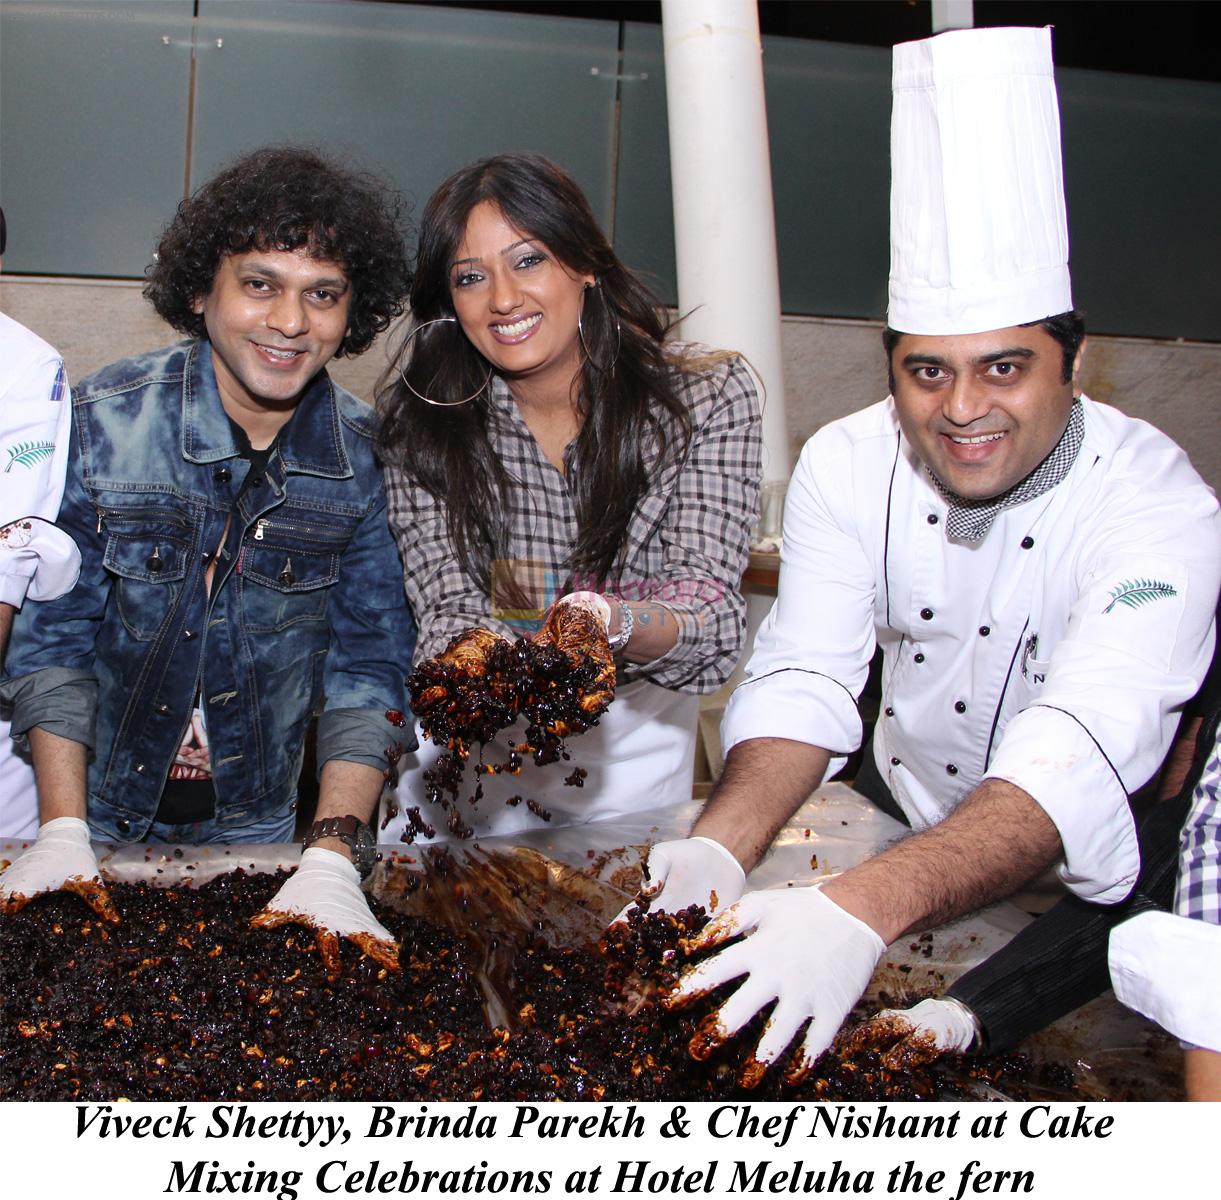 Viveck Shettyy, Brinda Parekh & Chef Nishant at Cake Mixing Celebrations at Hotel Meluha the fern